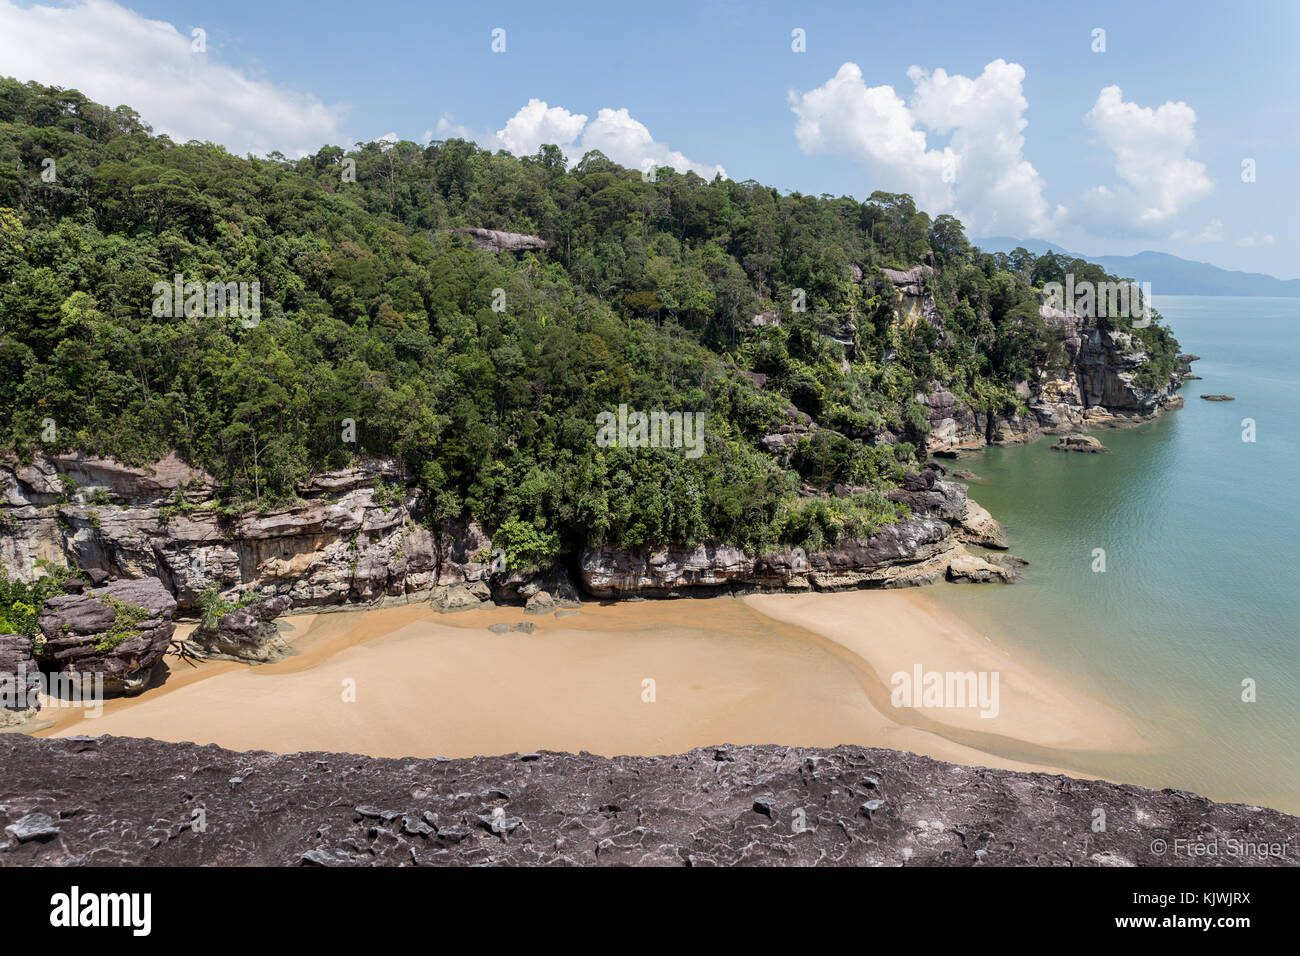 Landscapes at Bako national park in Malaysia, Borneo island Stock Photo